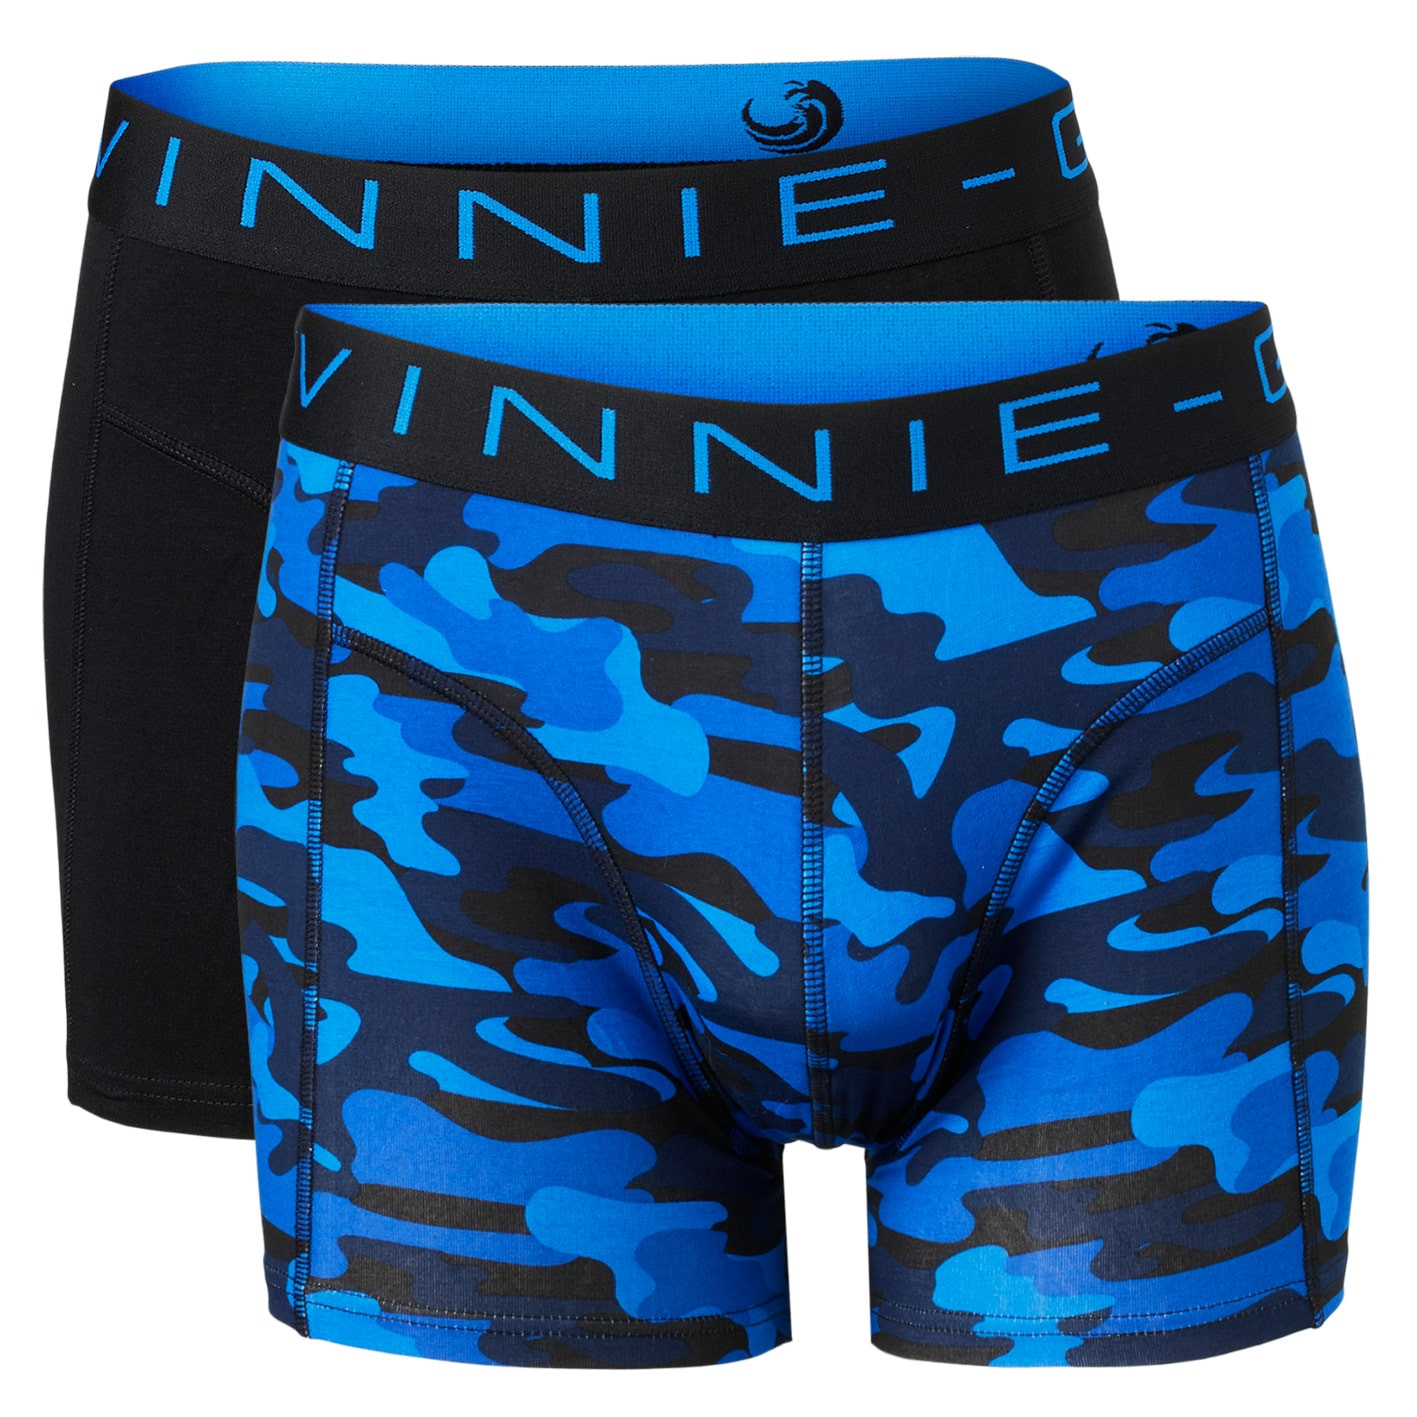 Vinnie-G Boxershorts 2-pack Black/Blue Army-XL